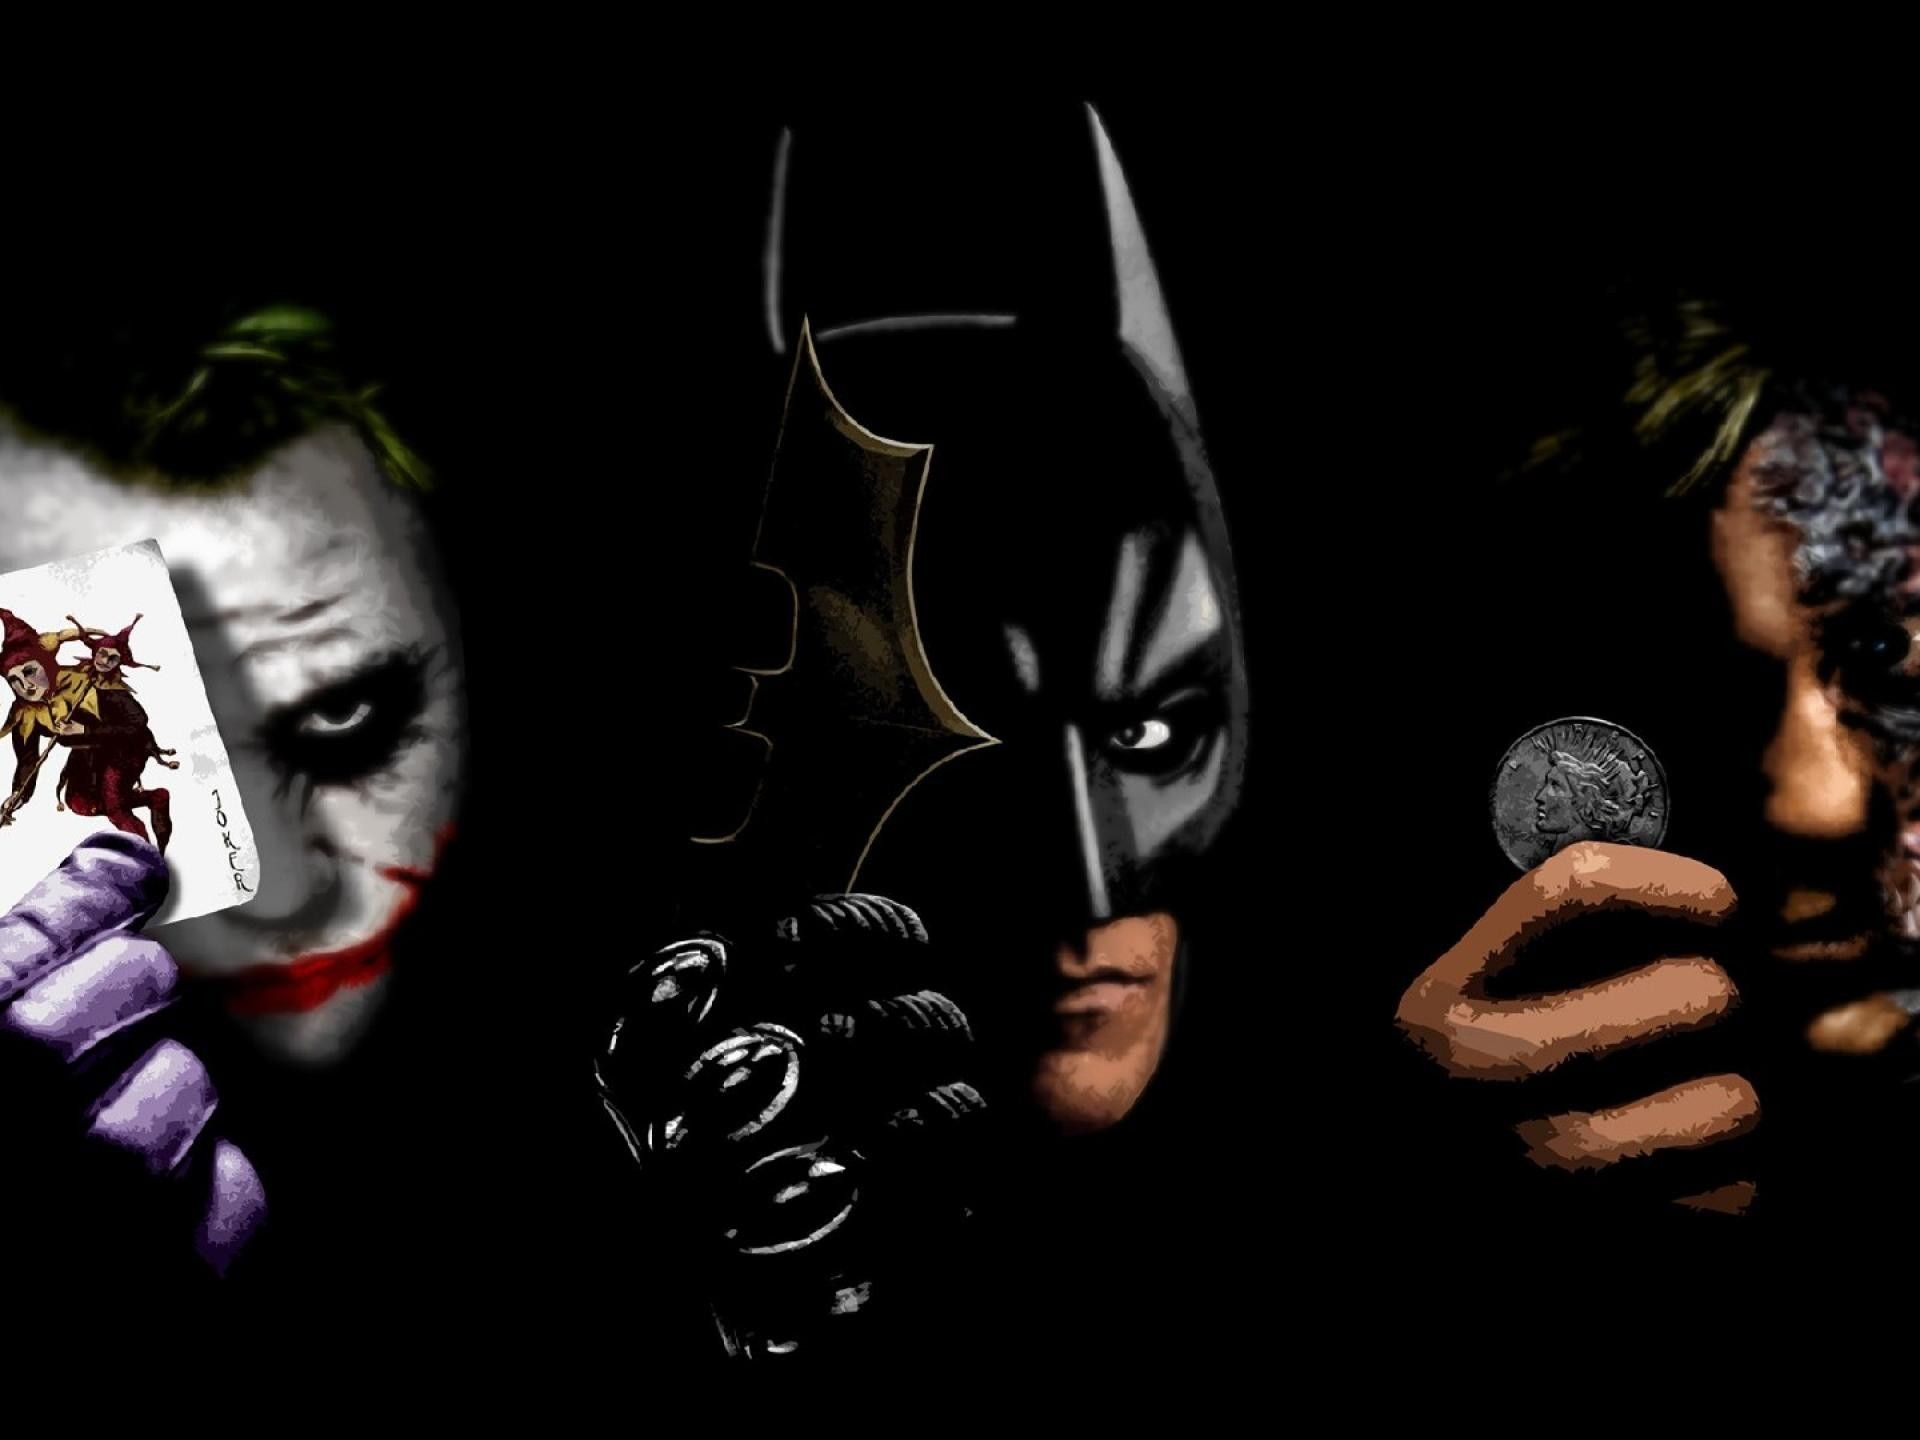 Two Face Batman Wallpaper